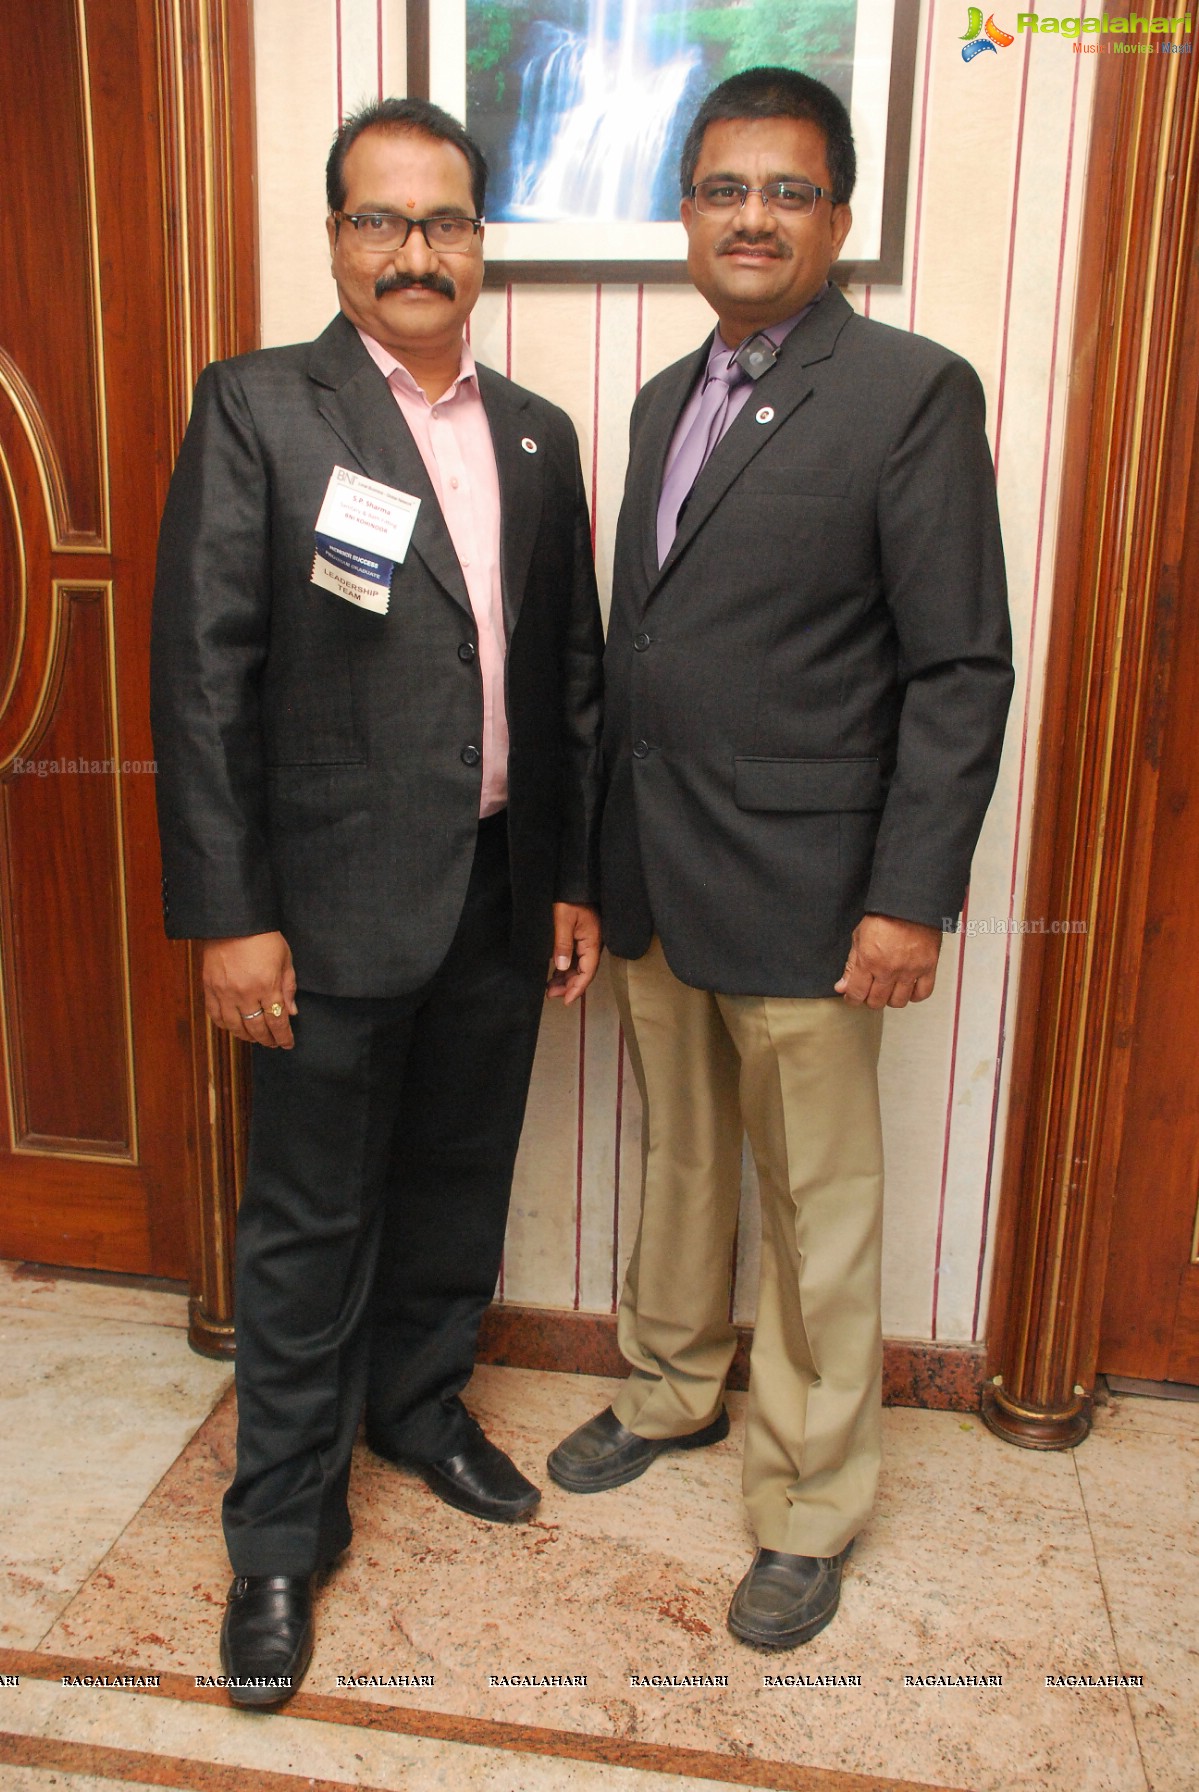 BNI Kohinoor Meet at A'La Liberty (Nov. 26, 2014)